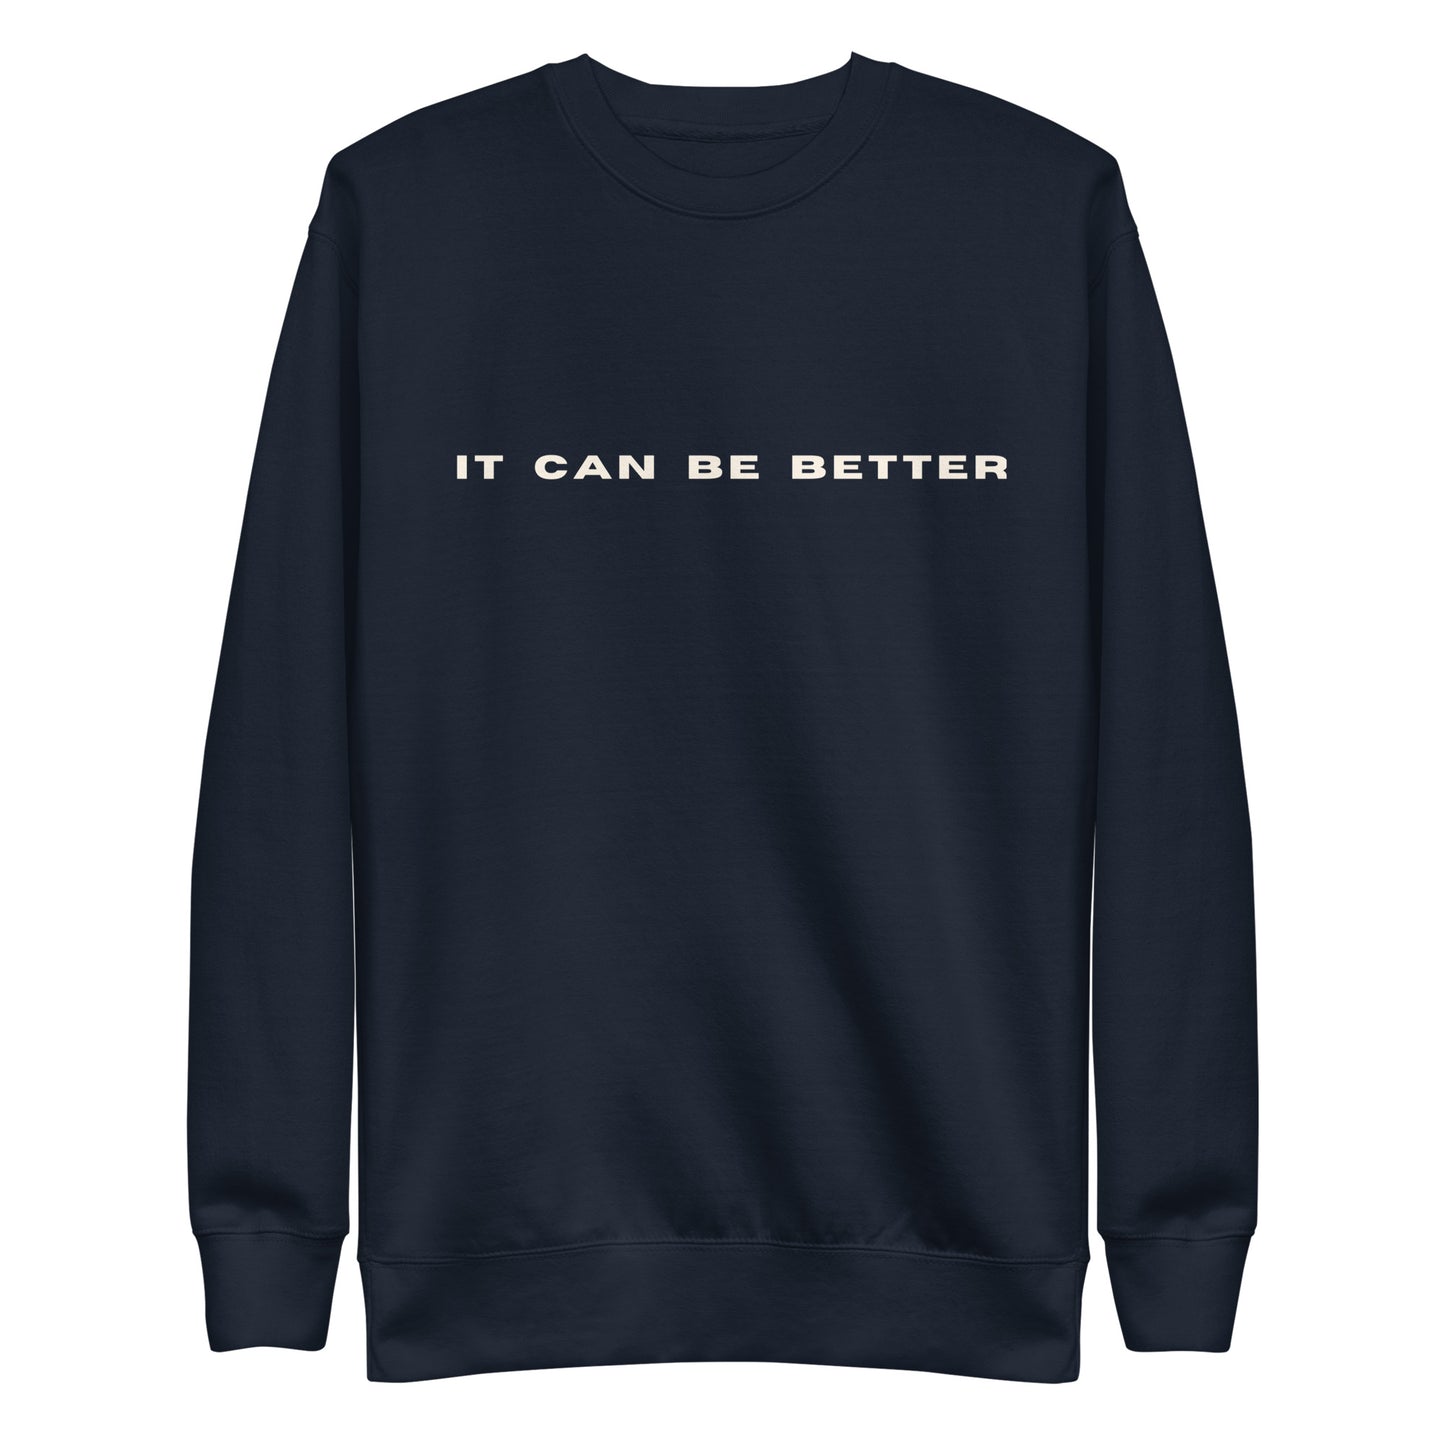 *it can be better* - Unisex Premium Sweatshirt